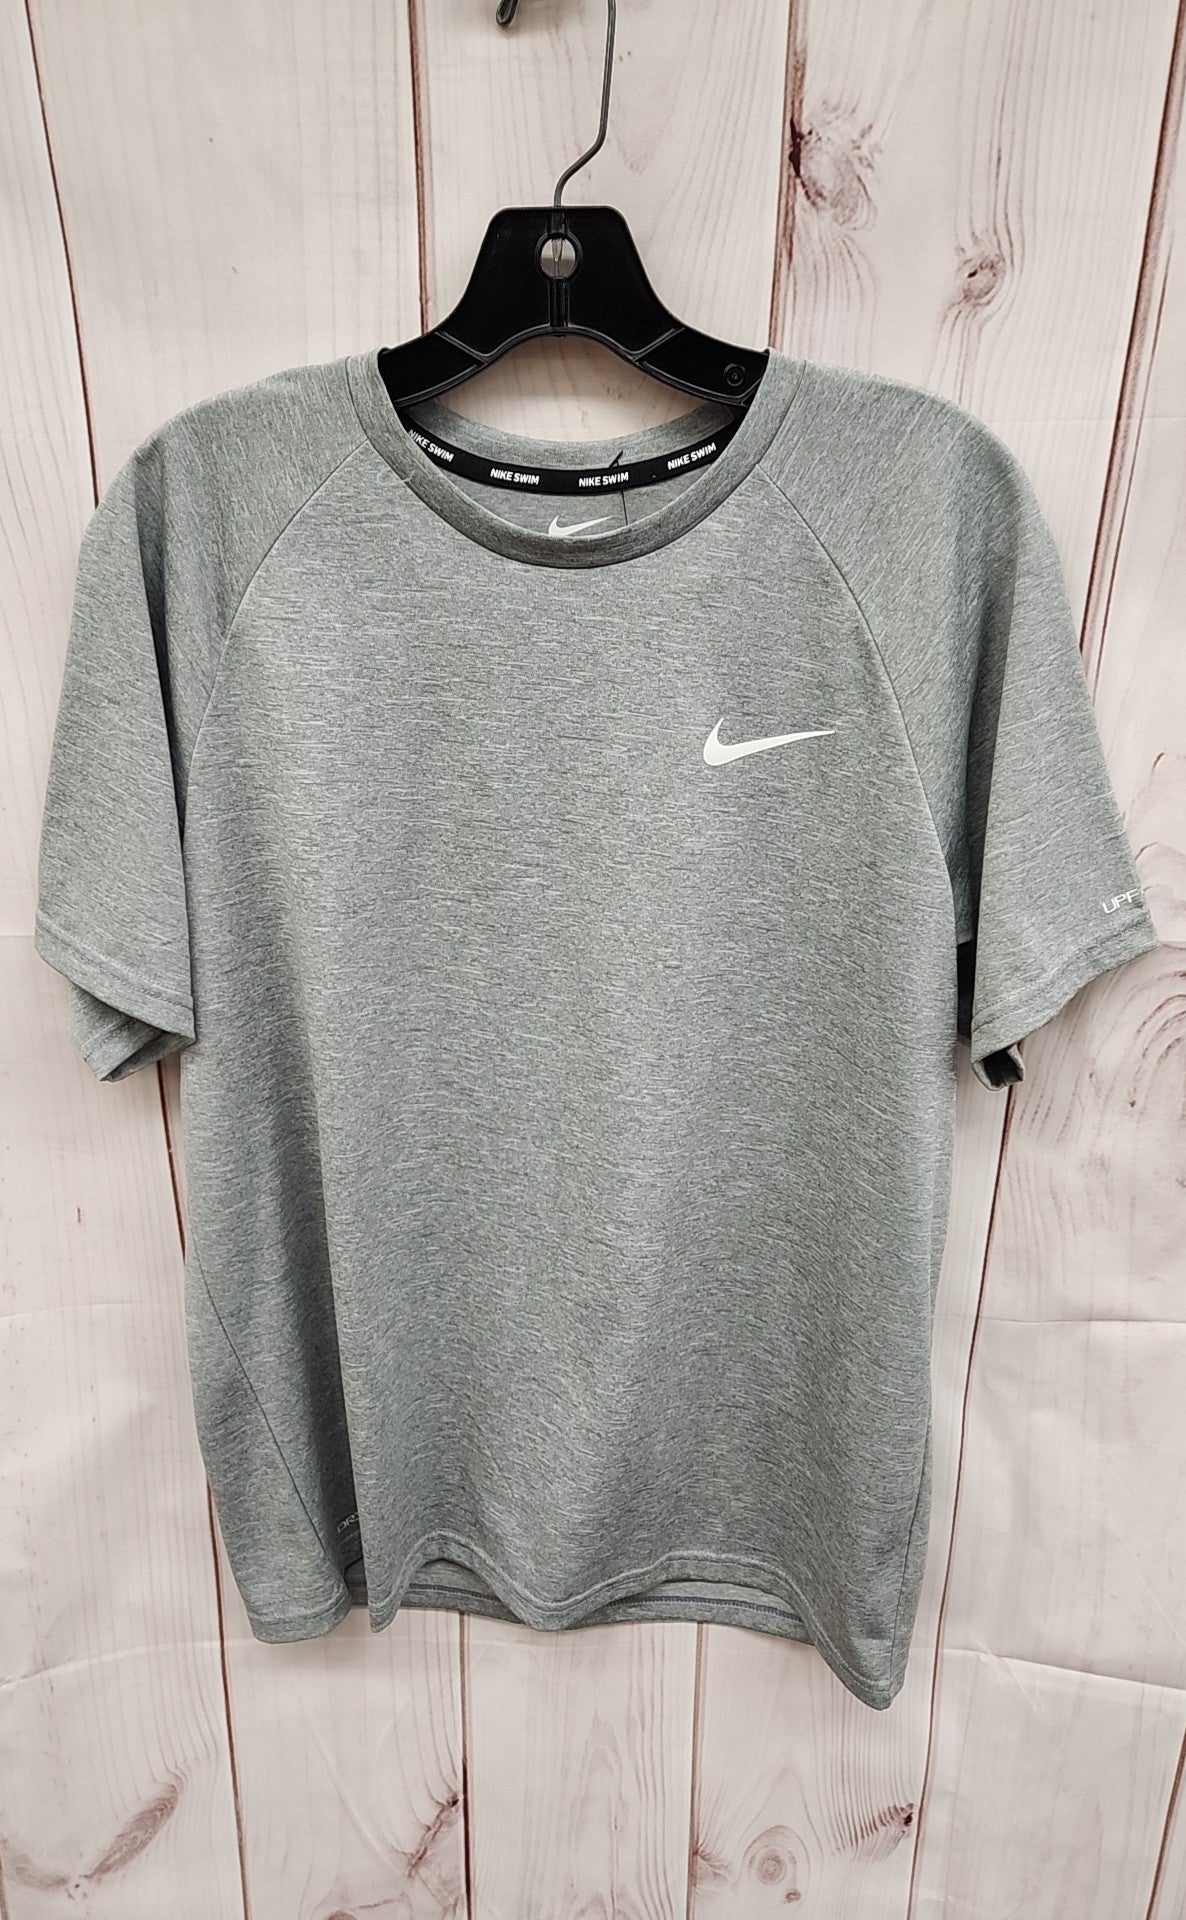 Nike Men's Size M Gray Shirt UPF 40+